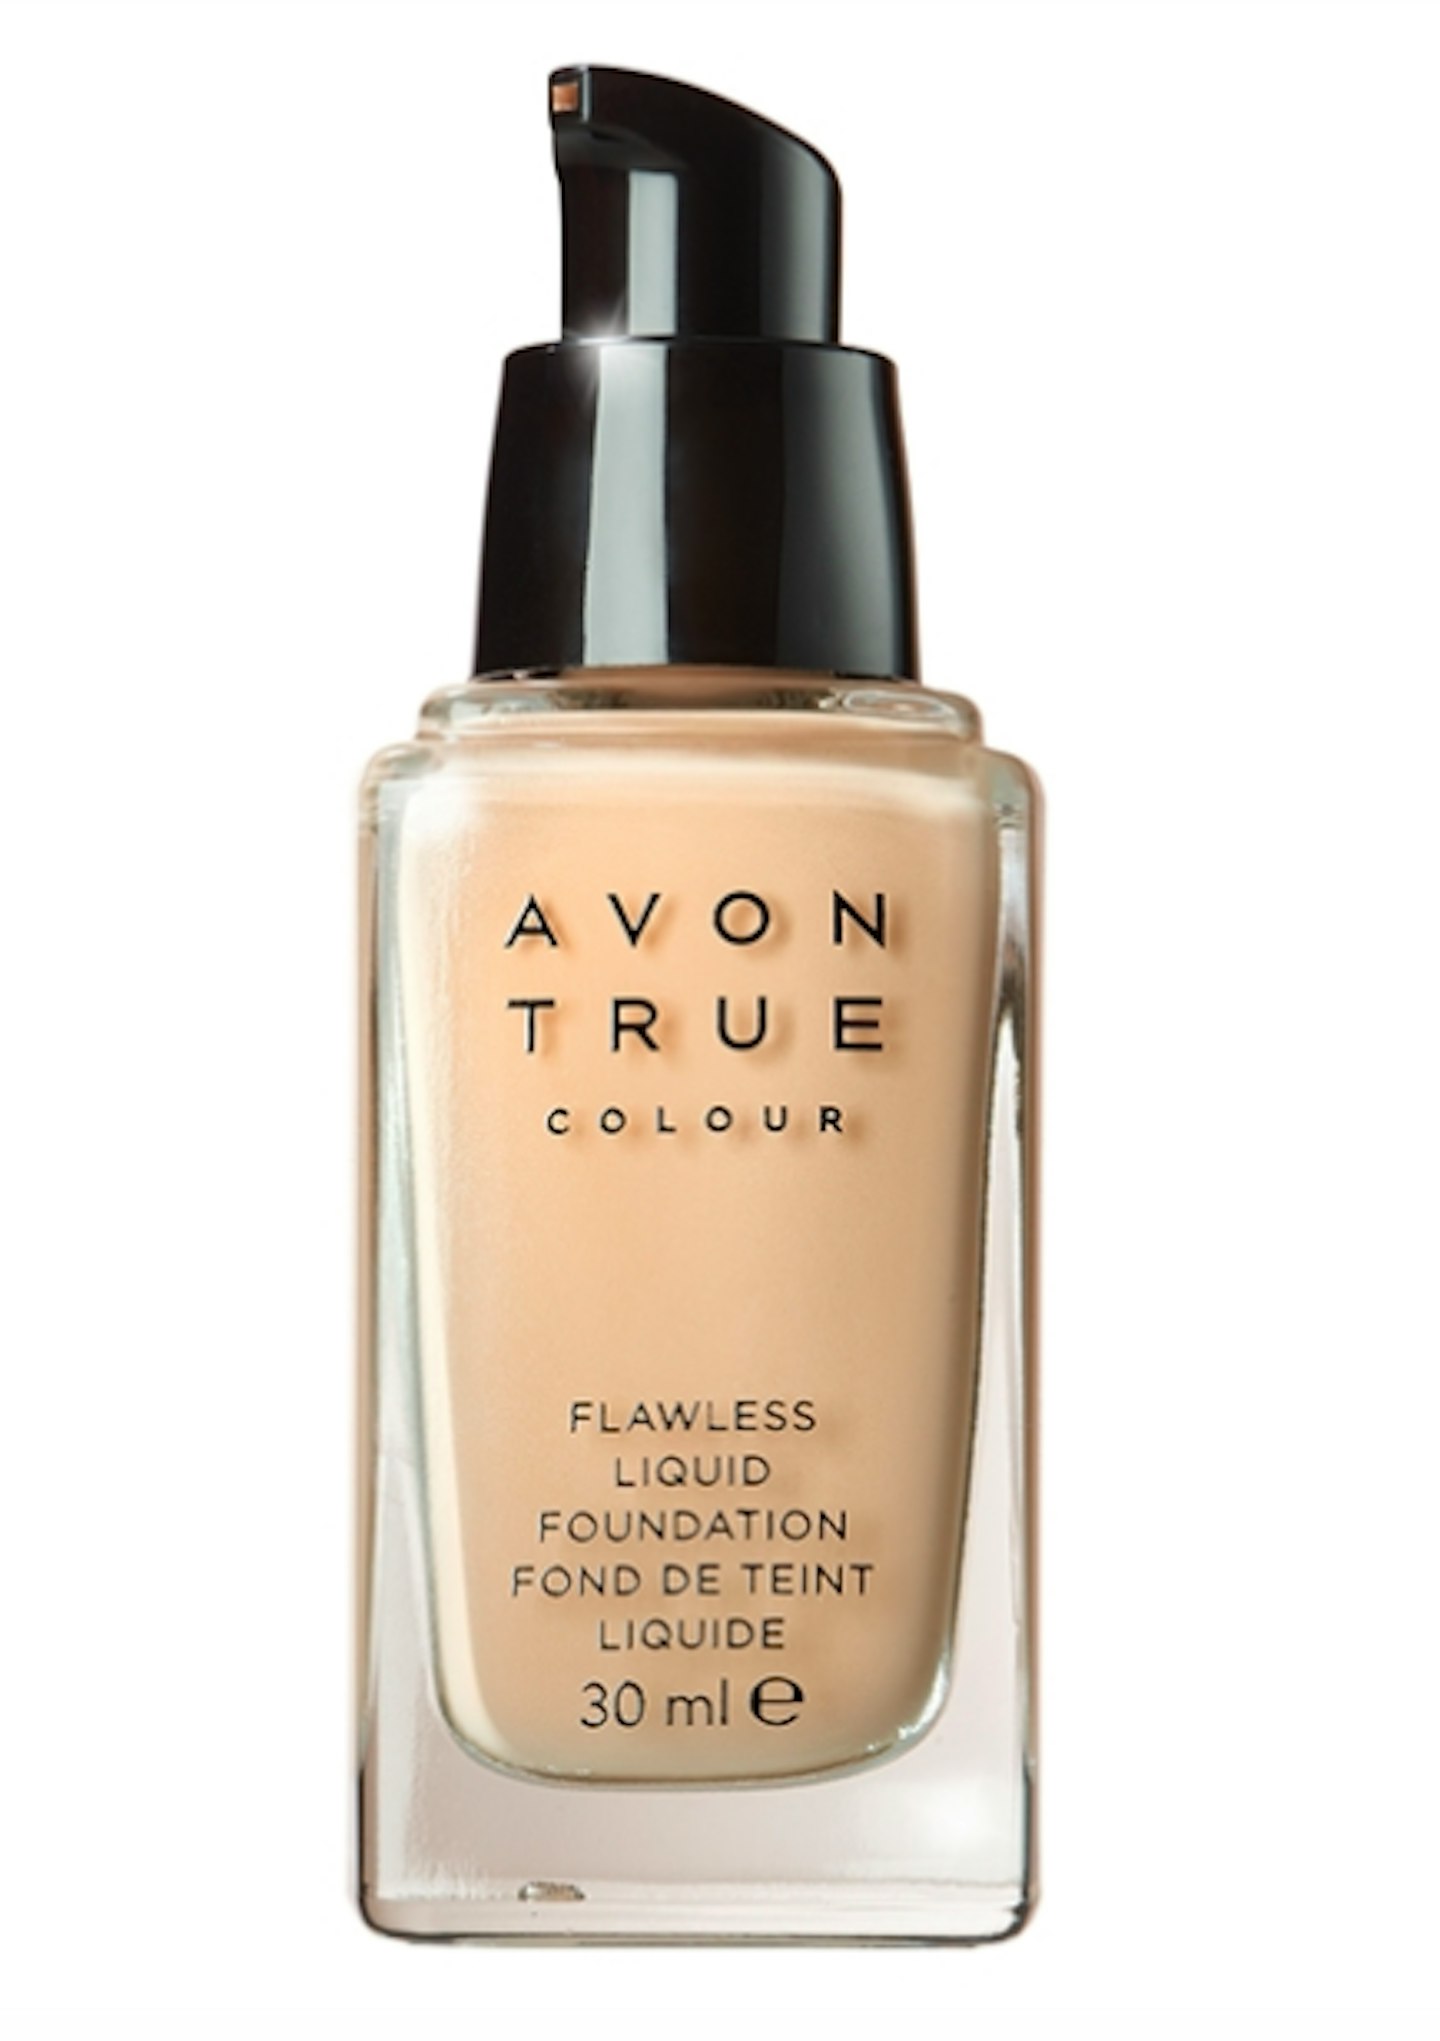 Avon True Colour Flawless Liquid Foundation, £10